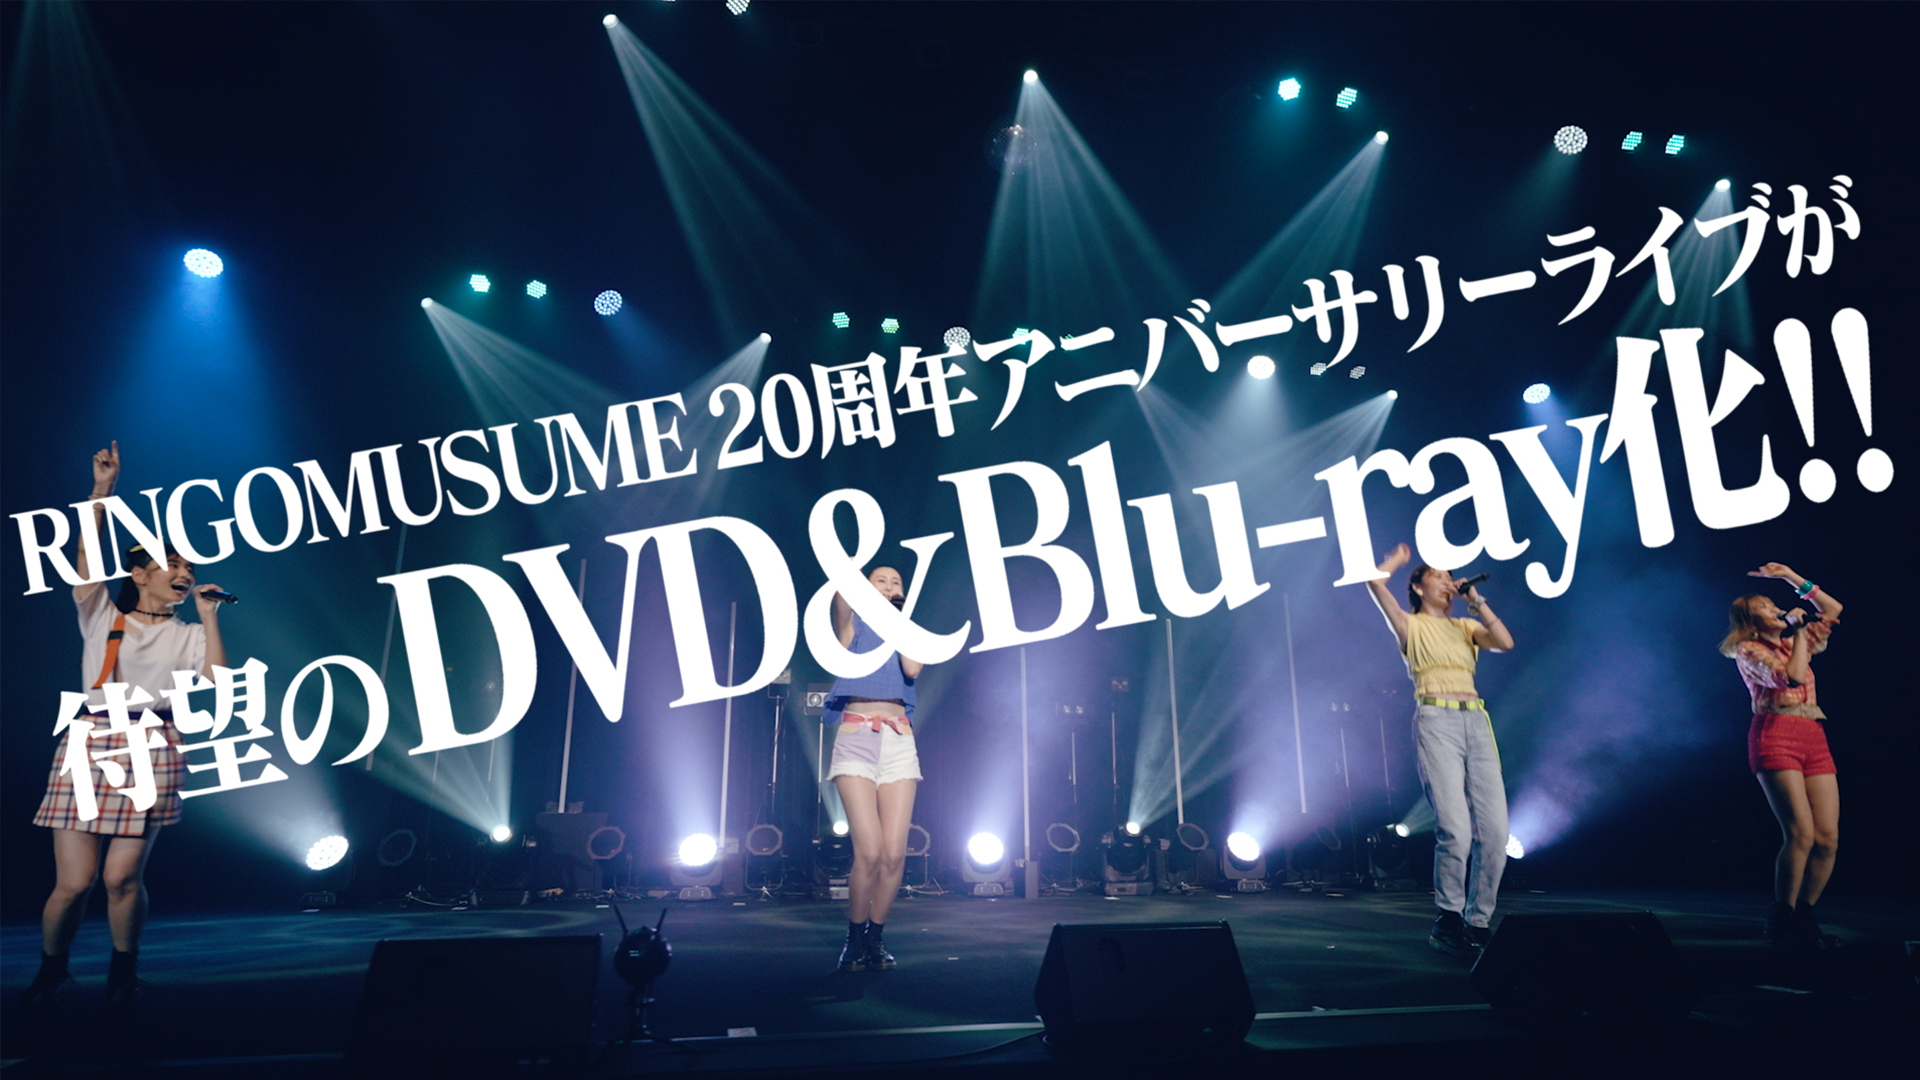 RINGOMUSUME 20th+1 ANNIVERSARY LIVE 〜りんごの木〜 』DVD・Blu-ray 